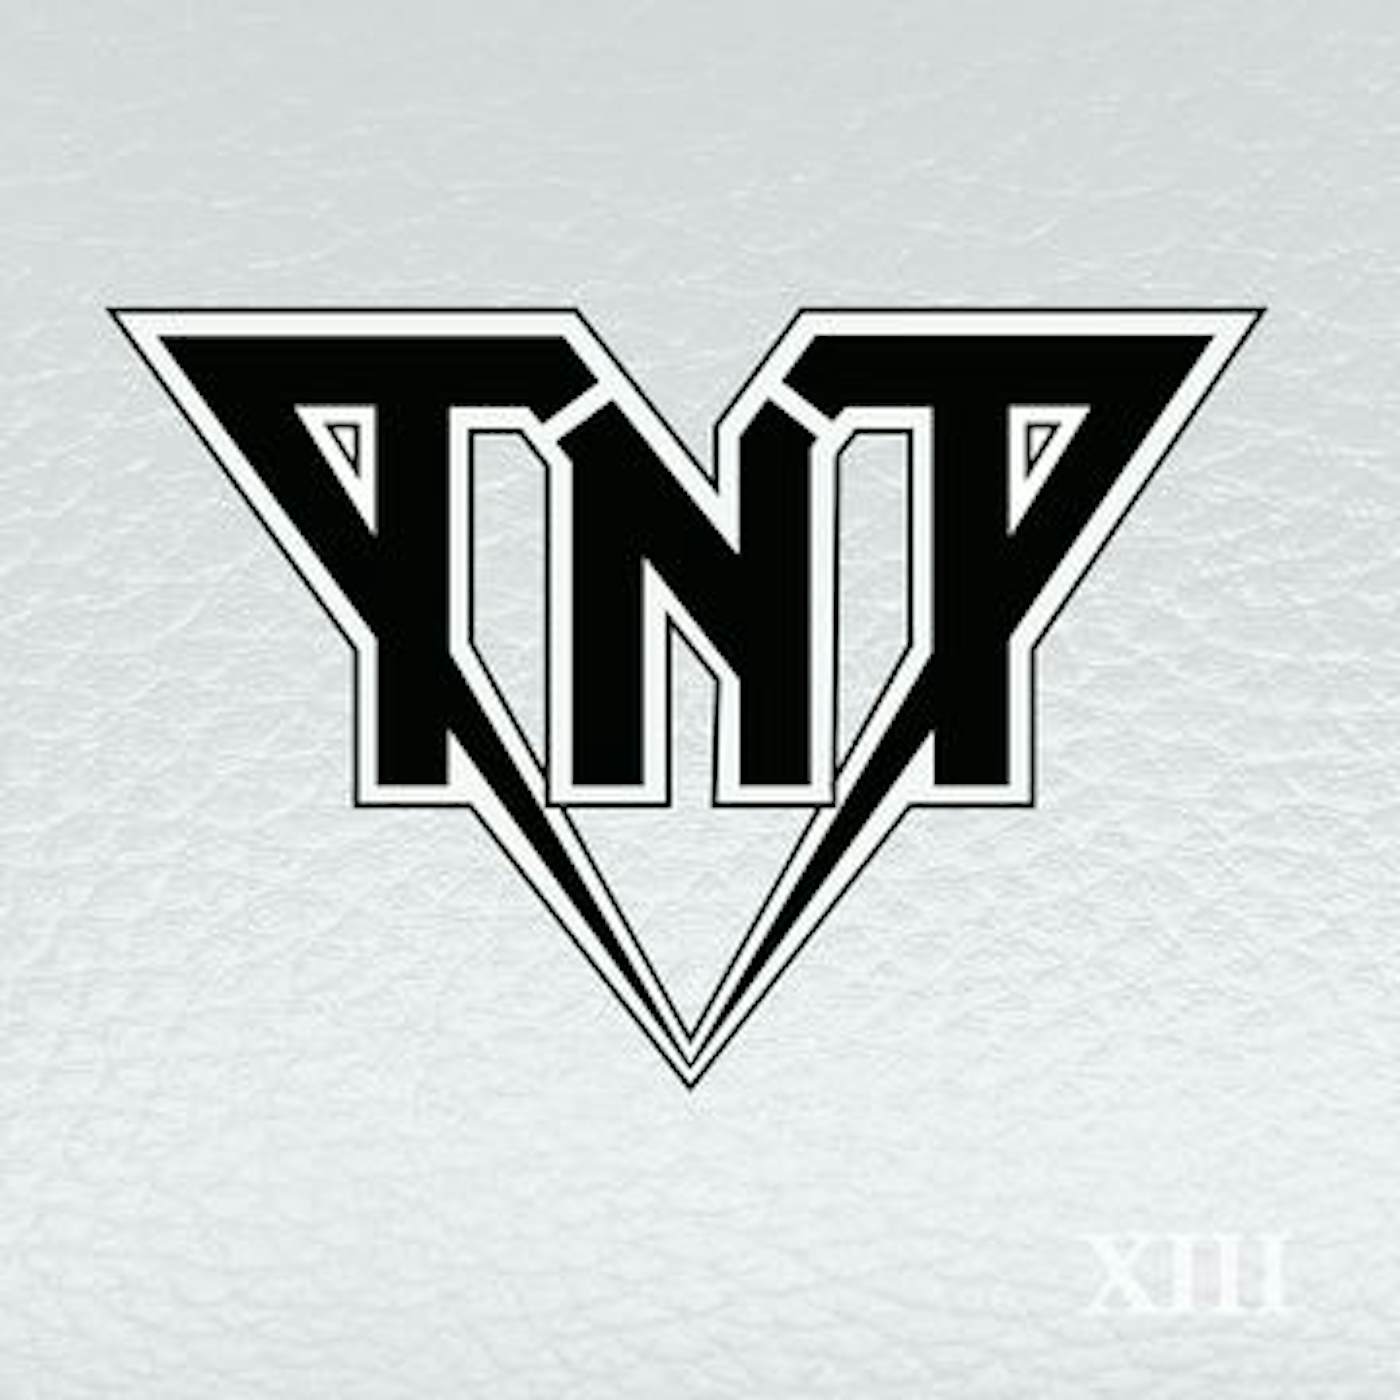 TNT Xiii Vinyl Record